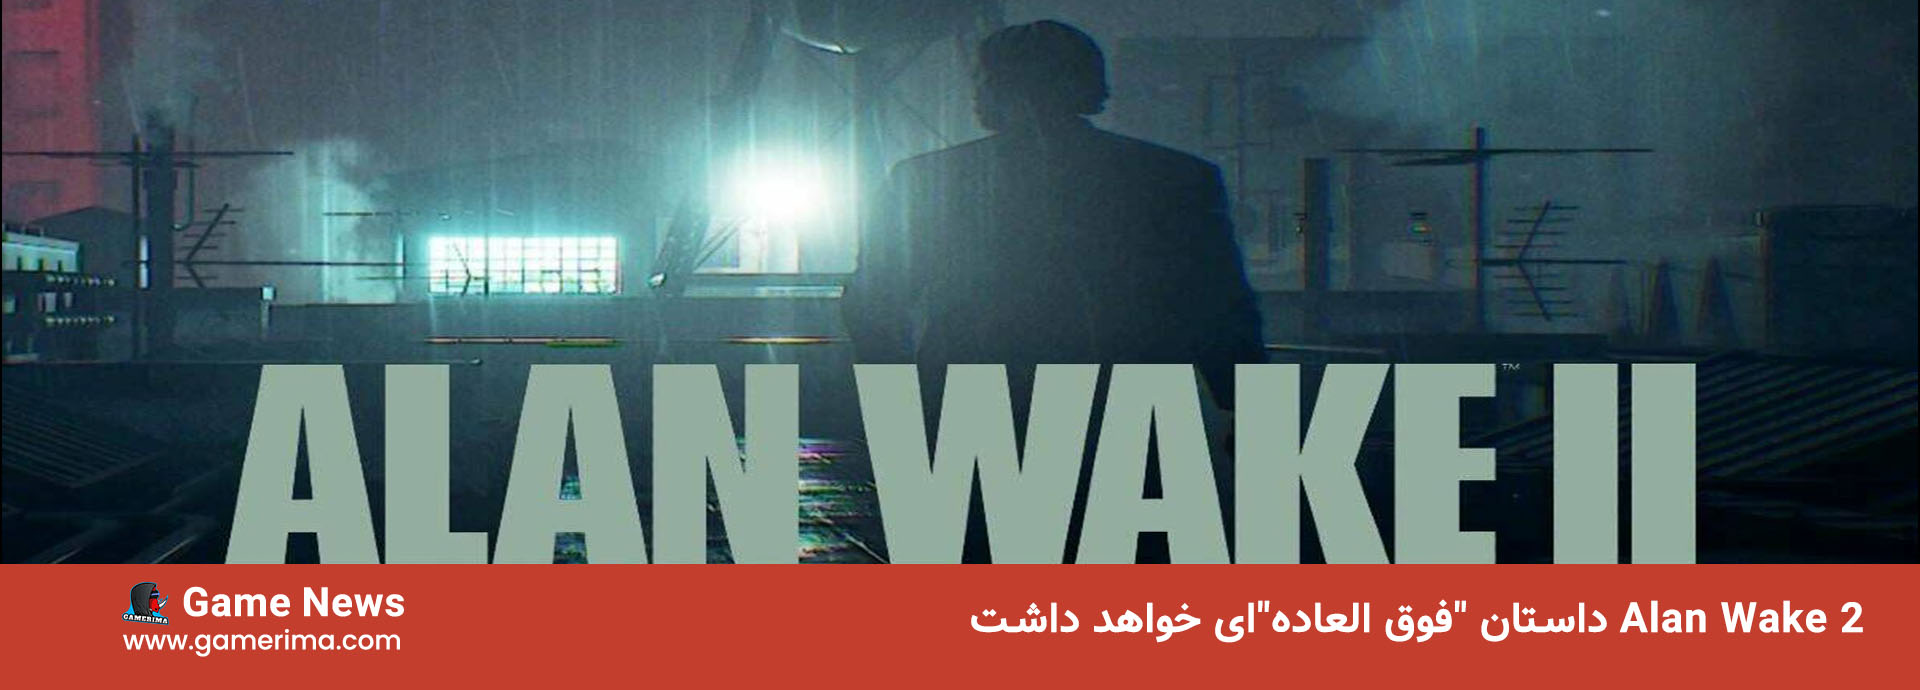 Alan Wake 2 داستان “فوق العاده”‌ای خواهد داشت